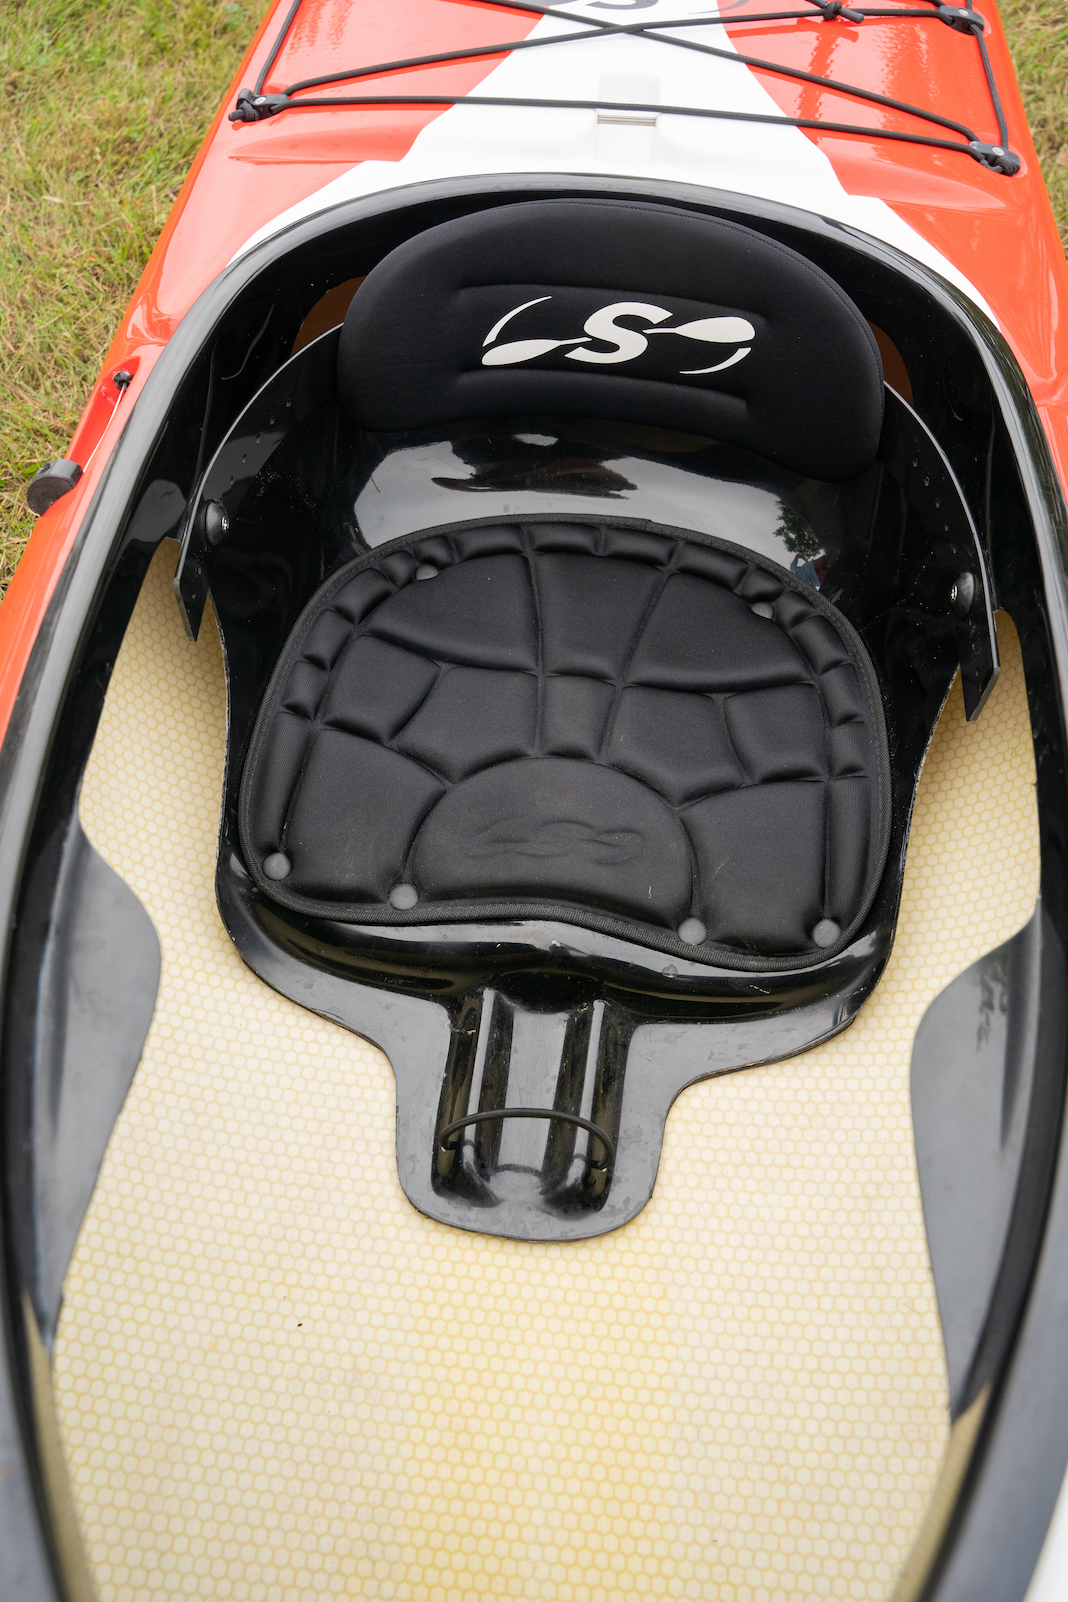 Seat in cockpit of kayak